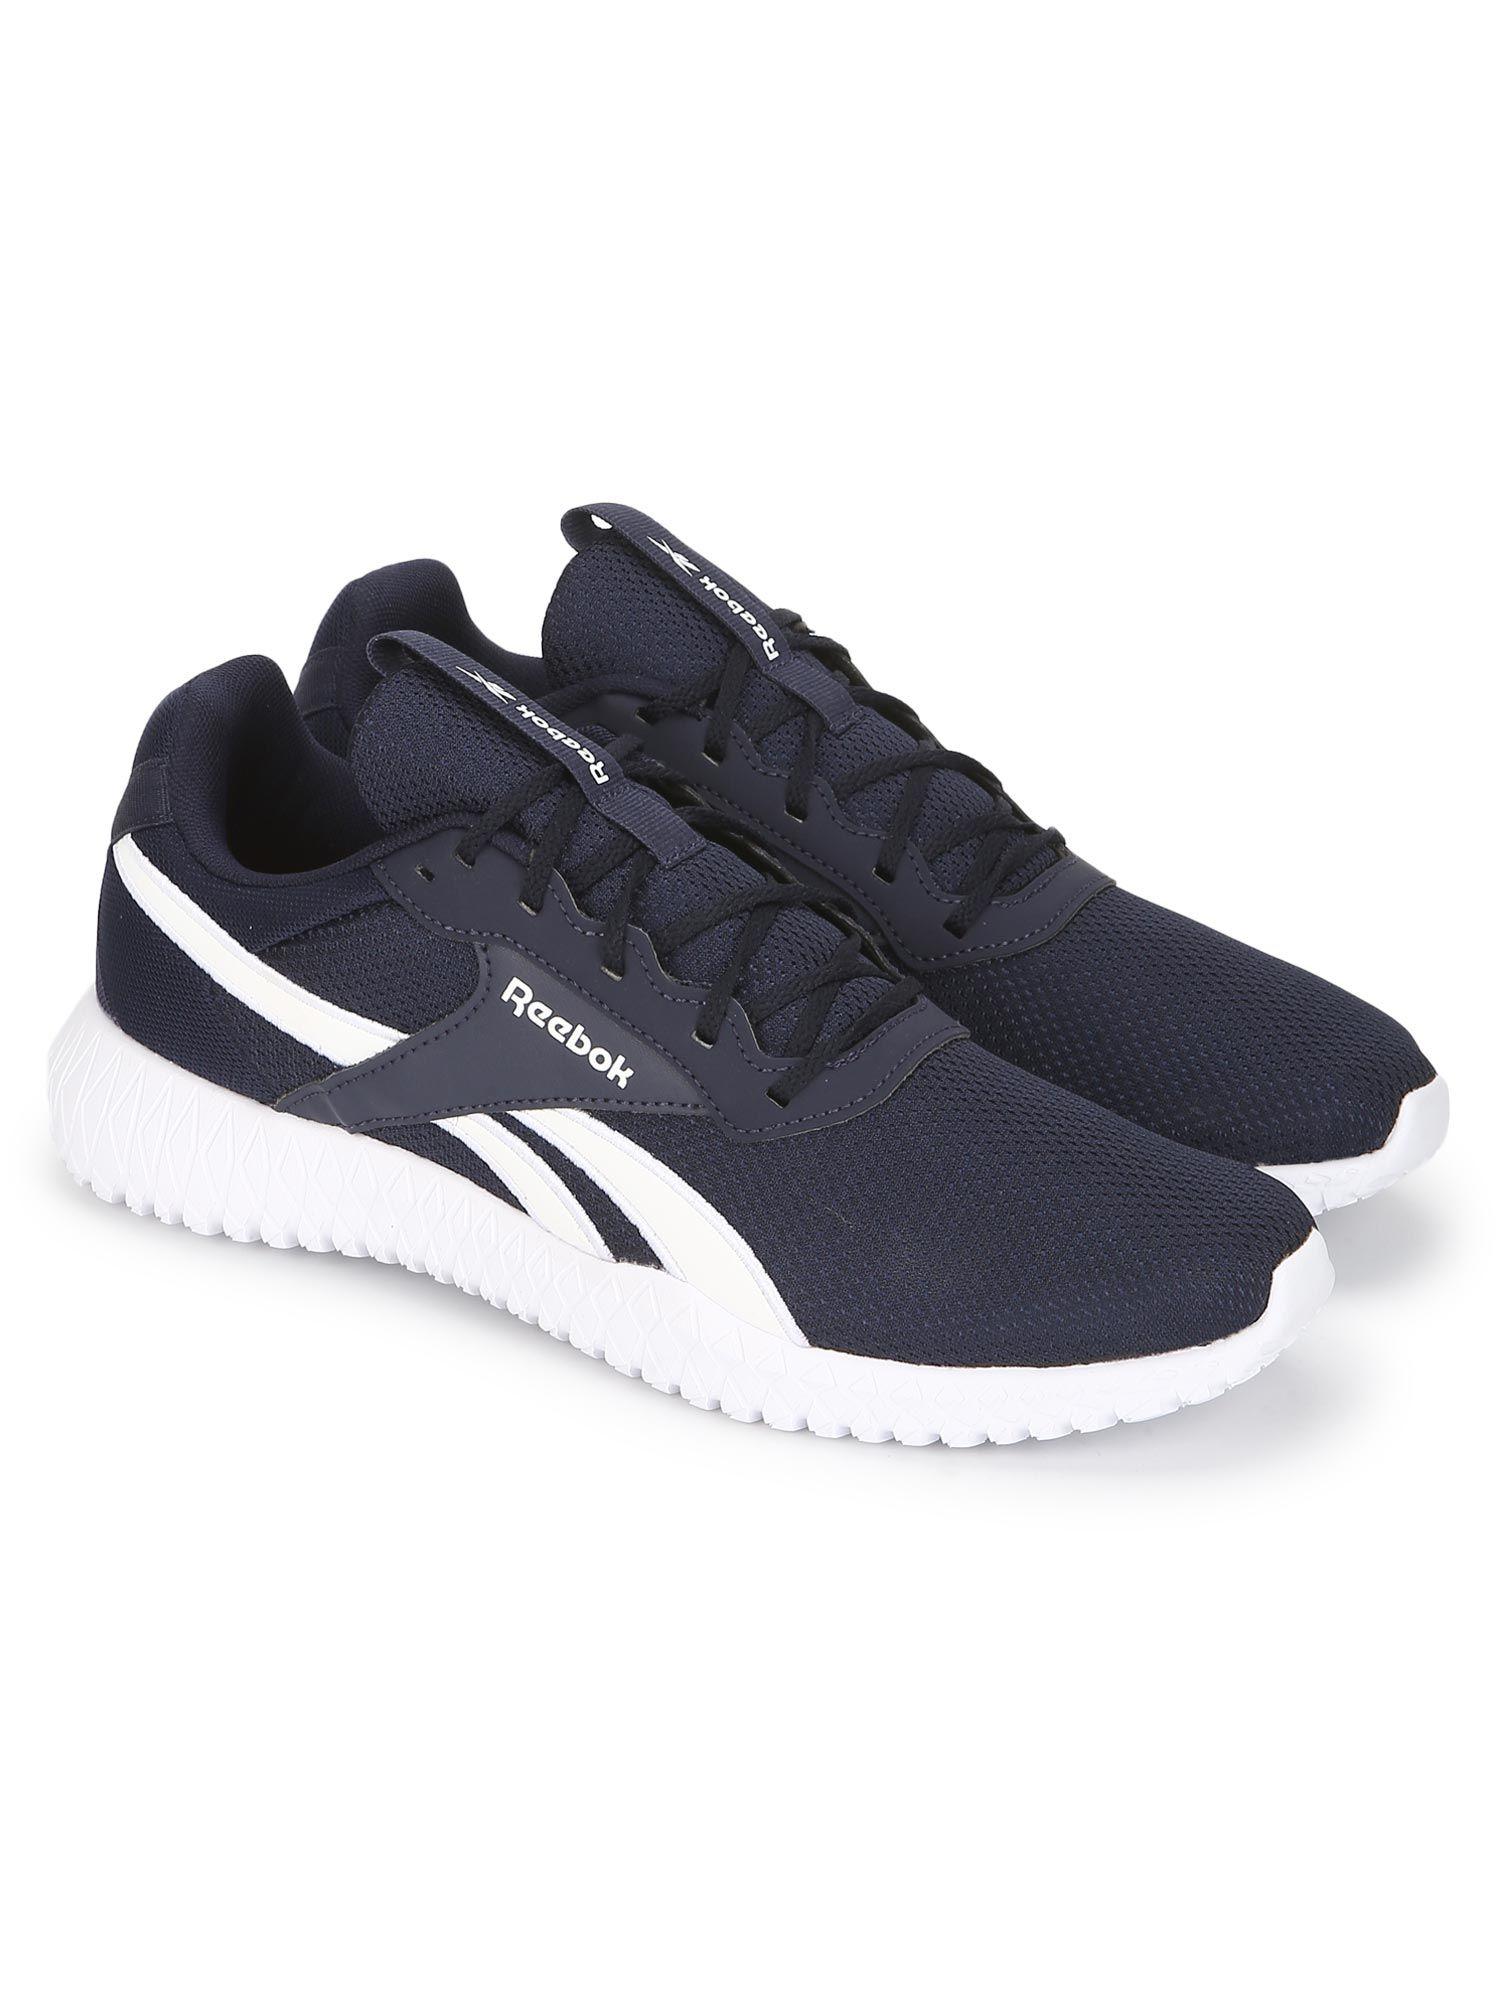 flexagon-energy-2.0-mt-blue-training-shoes